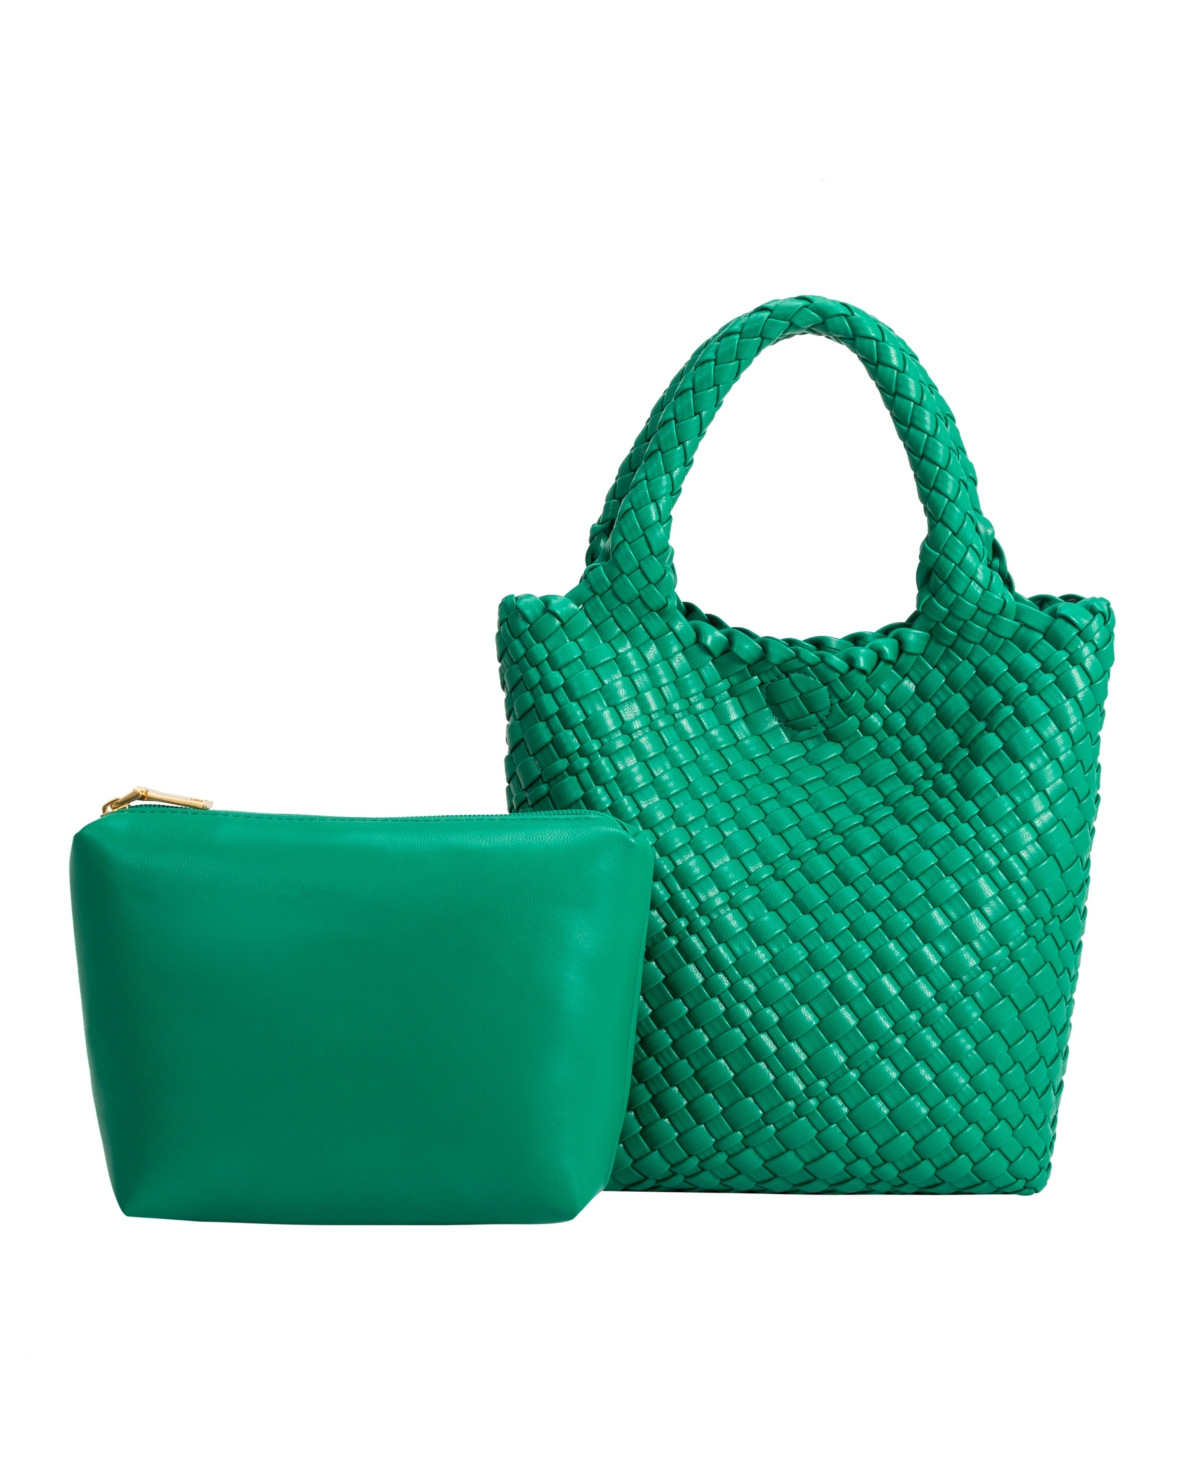 Women's Eloise Tote Bag - Green